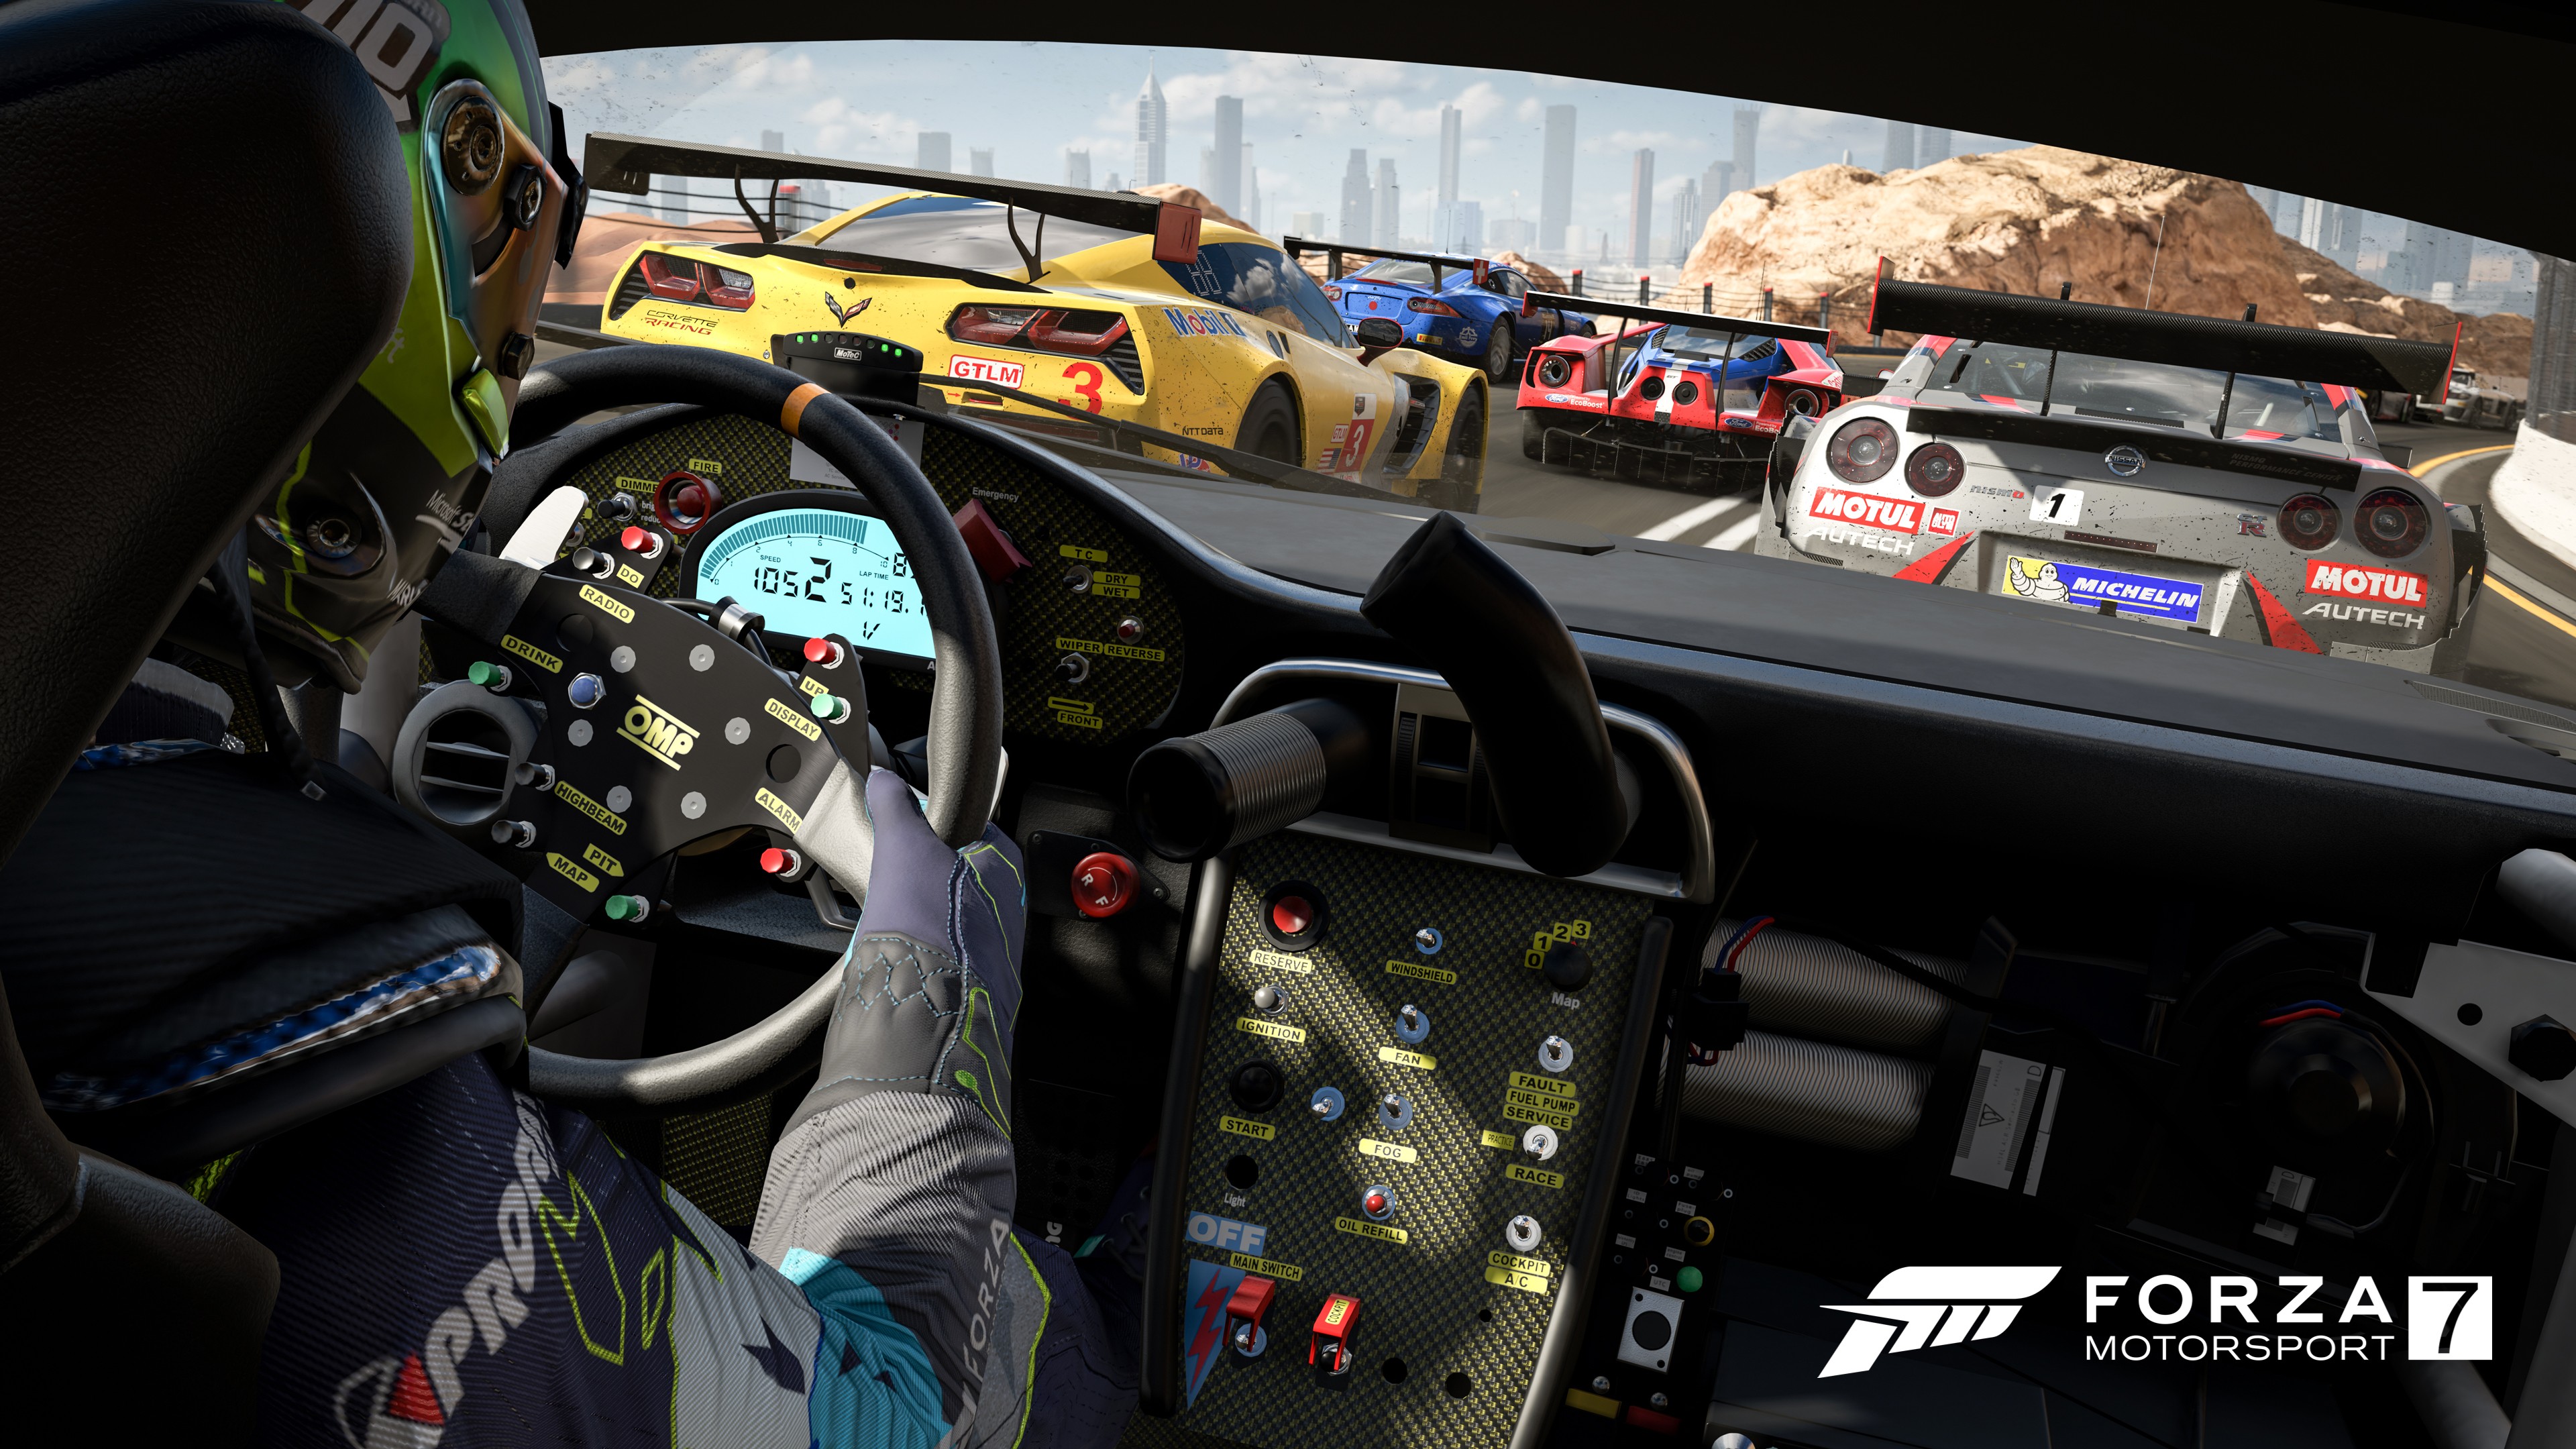 Wallpaper Forza Motorsport 7, 4k, E3 2017, Xbox One X